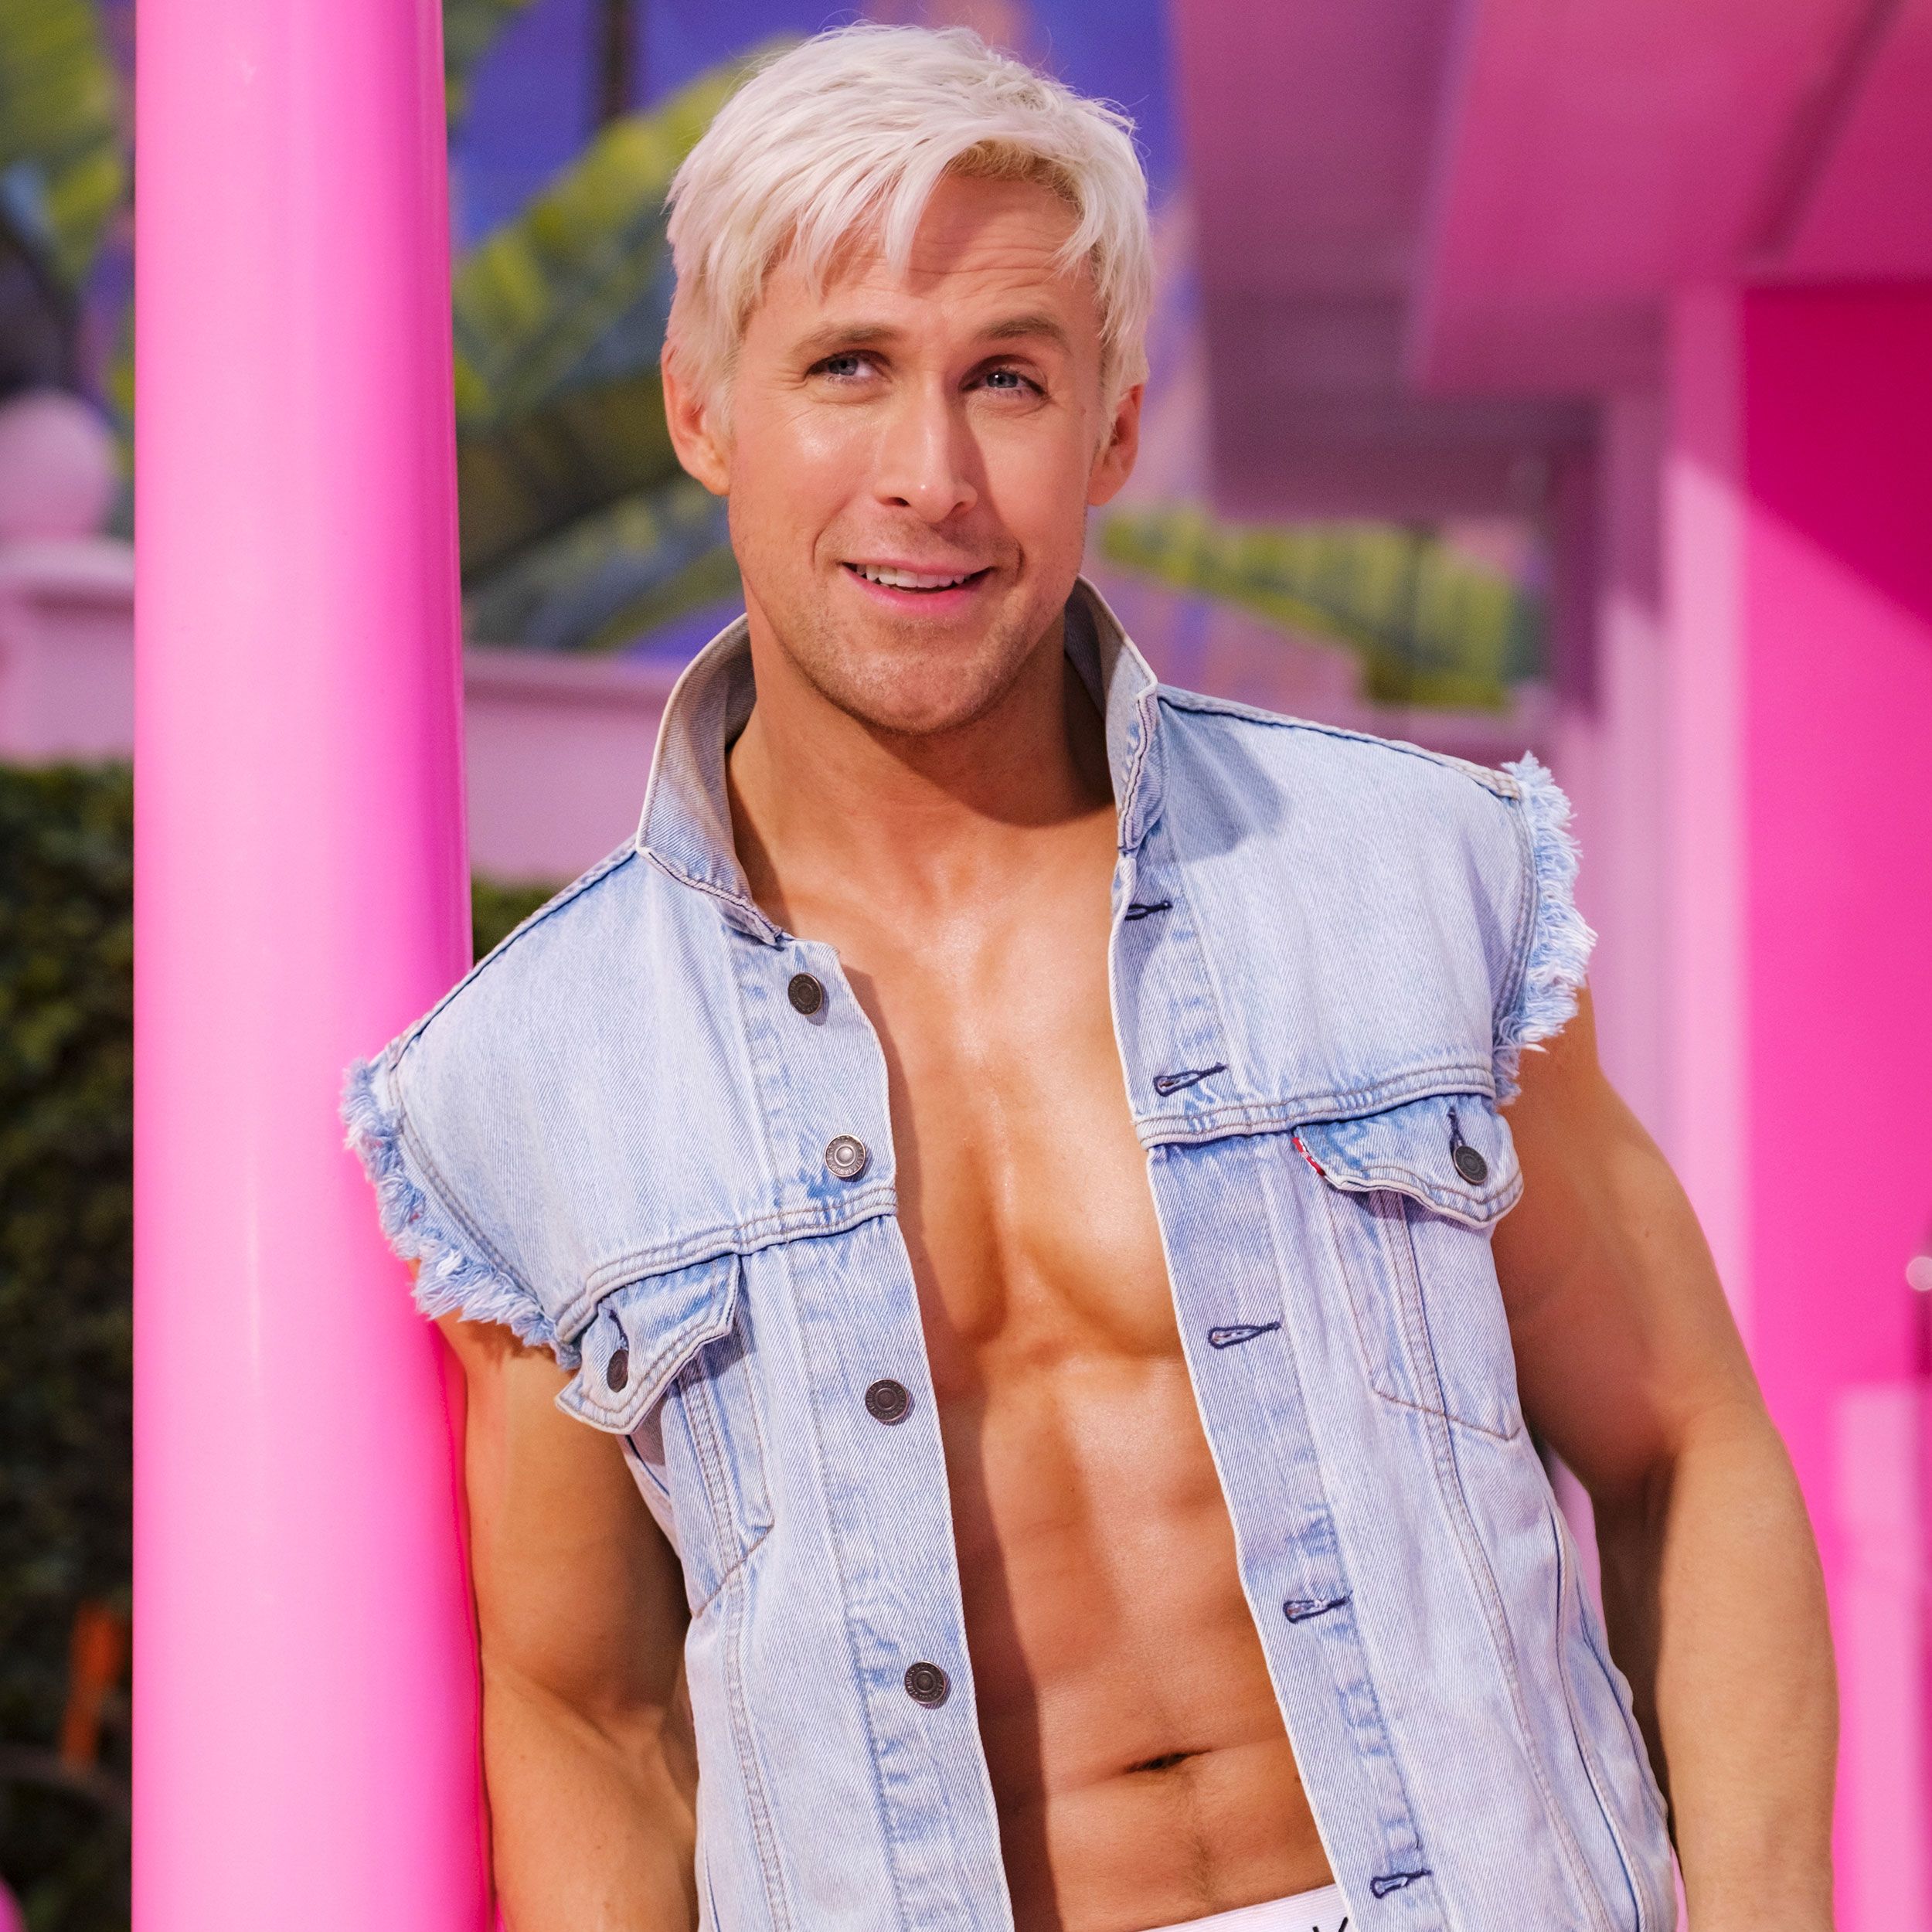 Barbie': Ryan Gosling's Ken revealed in new photo